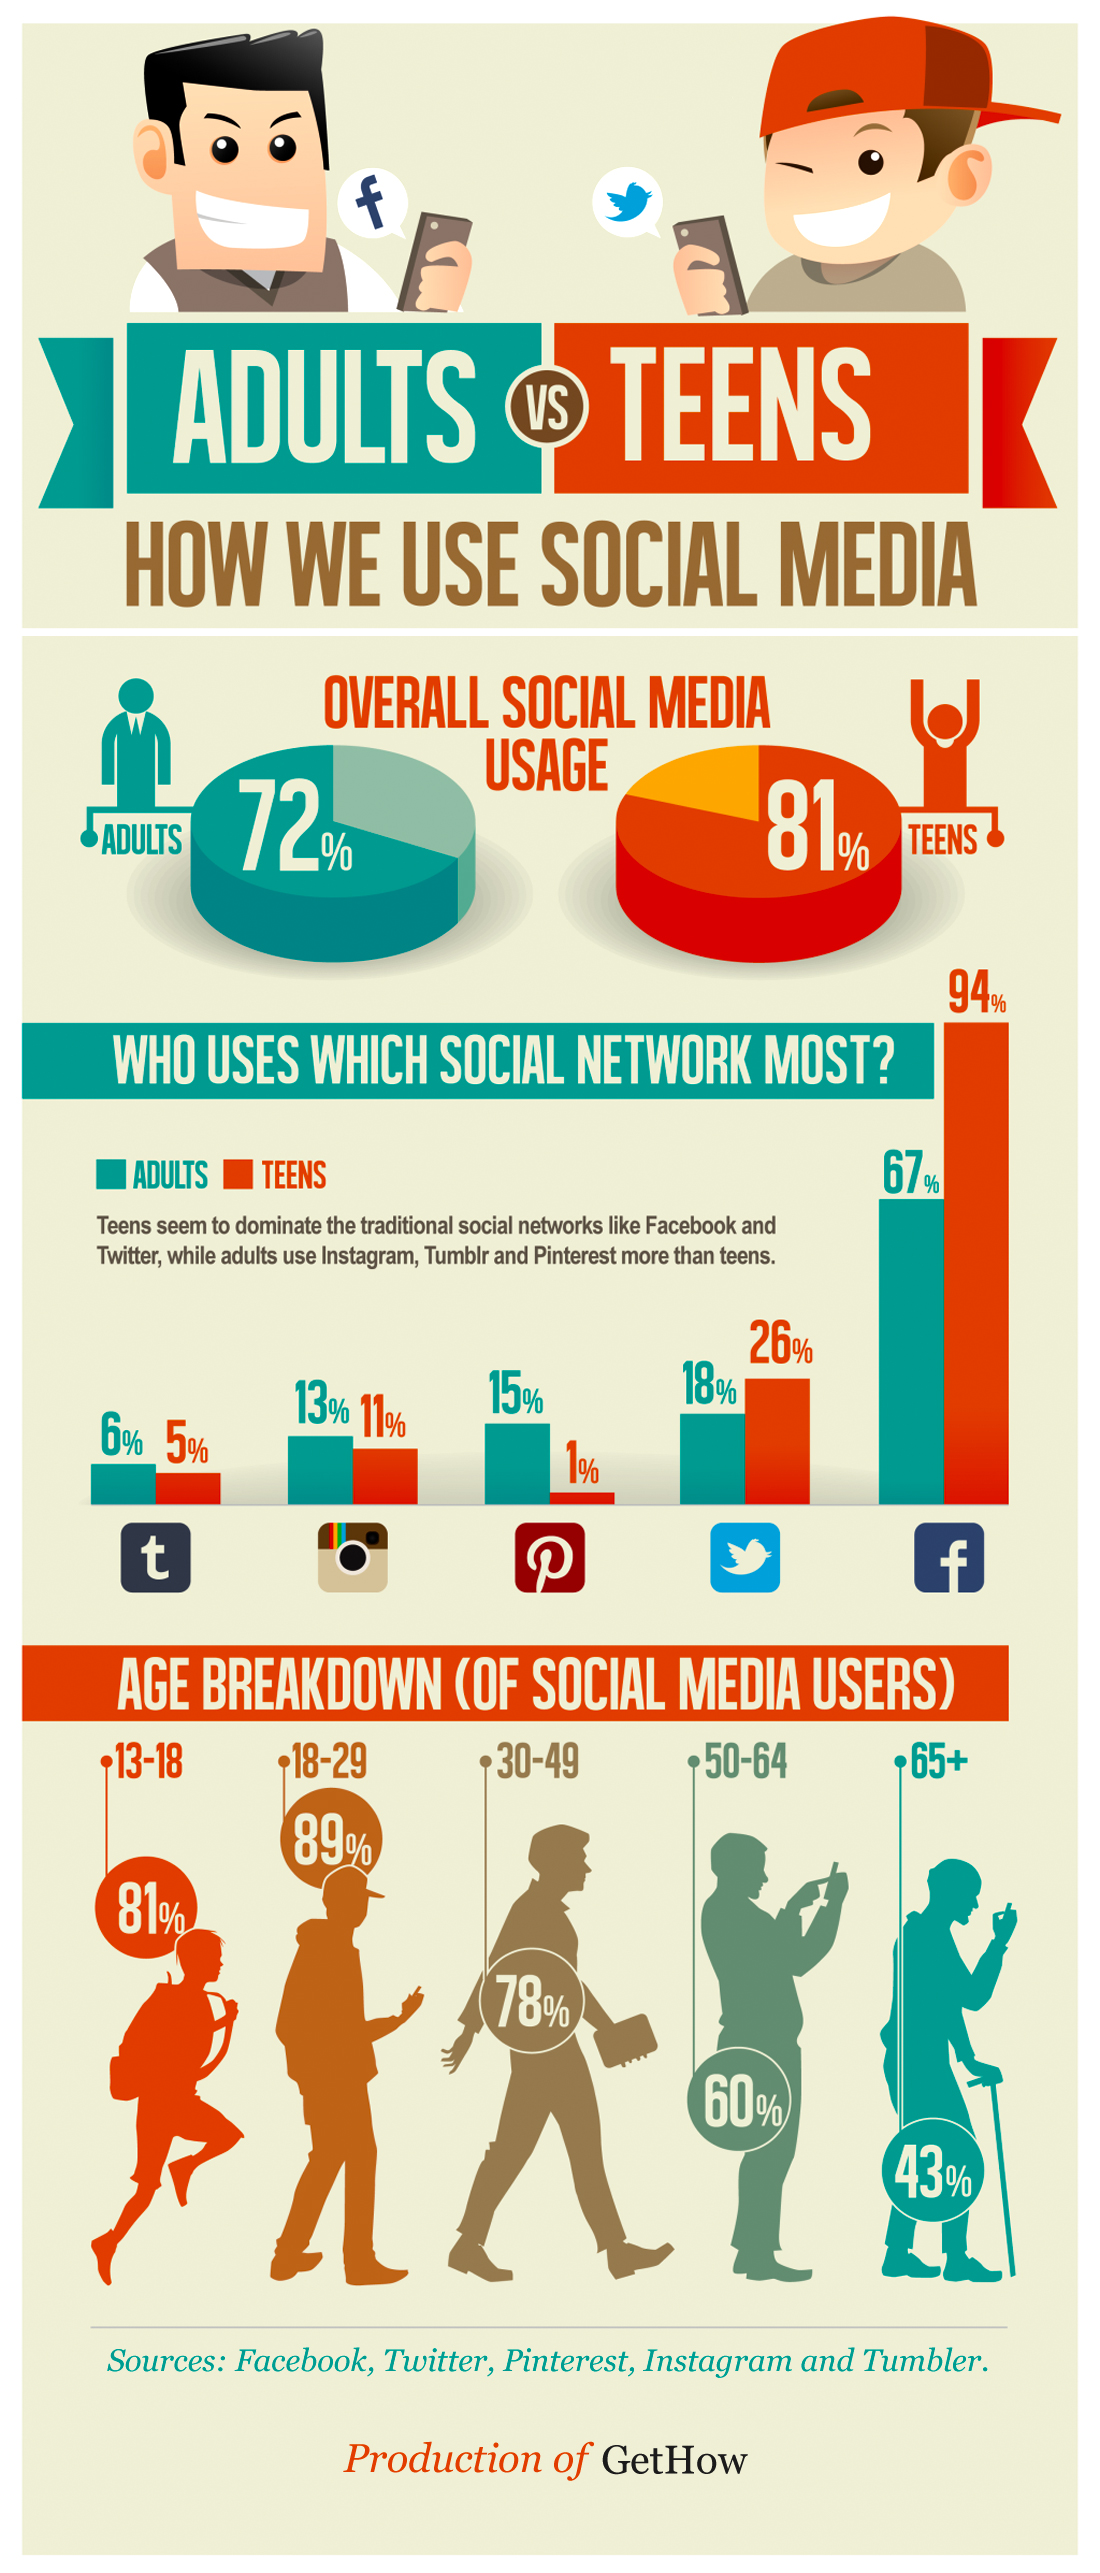 Adults vs Teens: How We Use Social Media